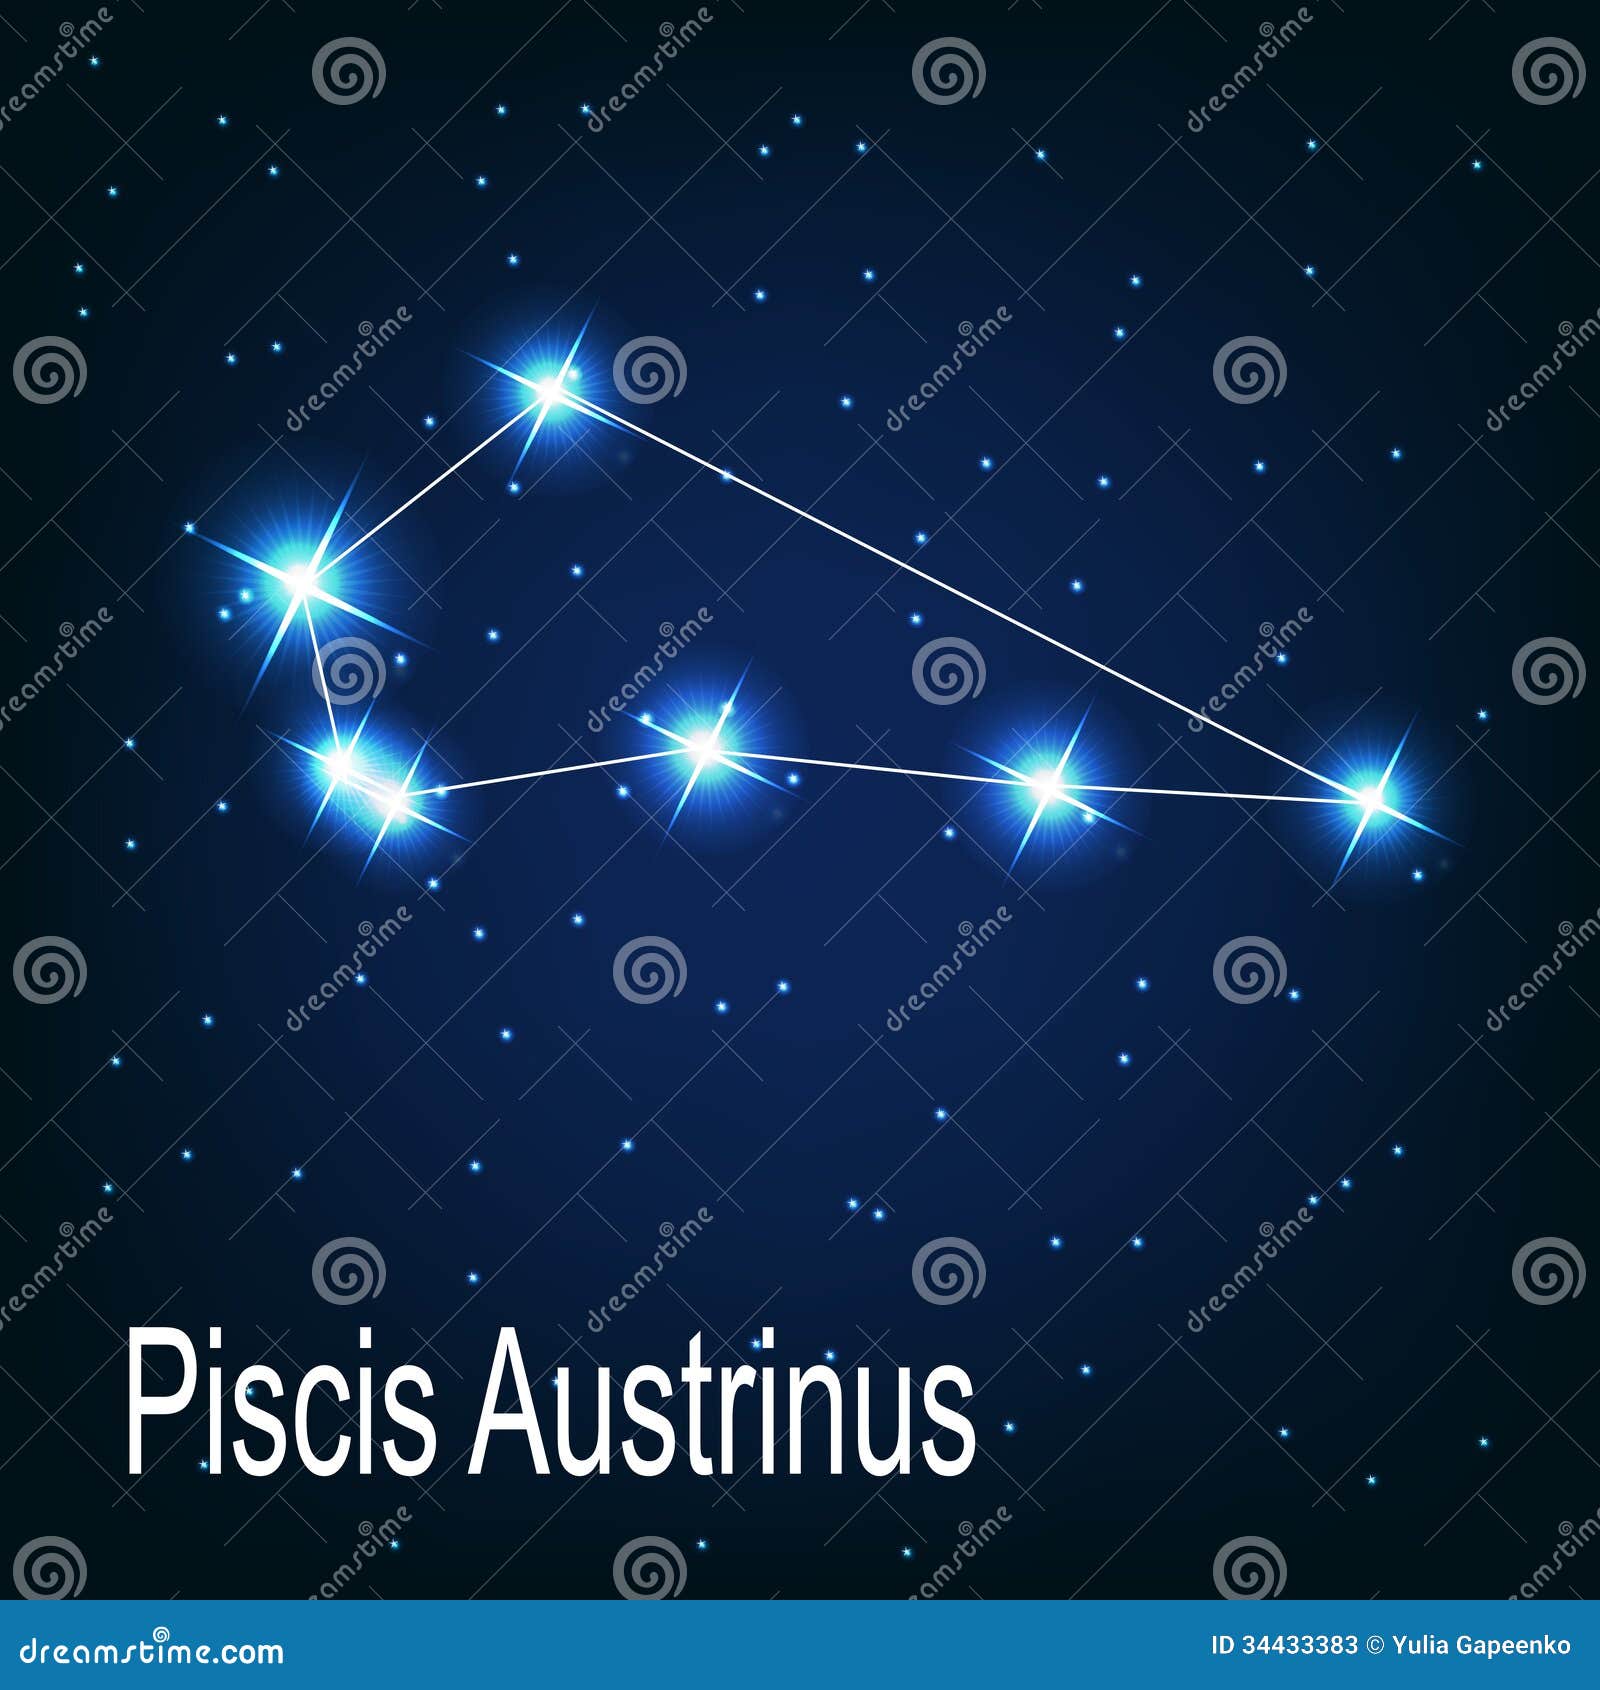 the constellation piscis austrinus star in the